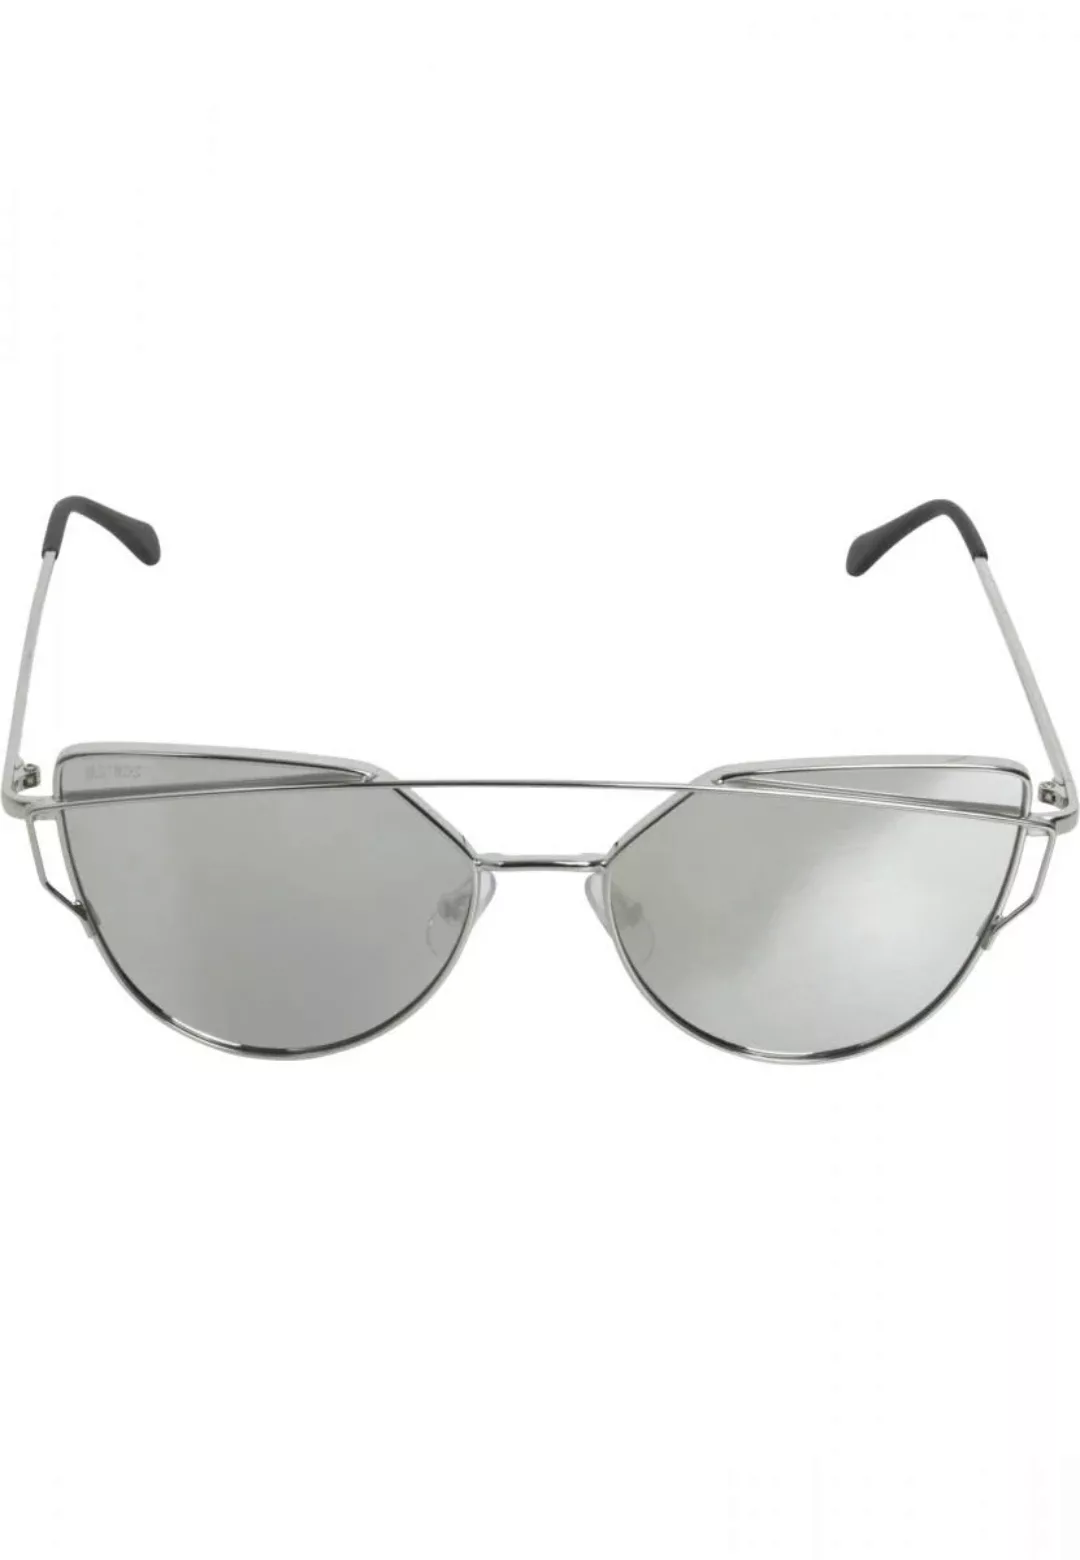 MSTRDS Sonnenbrille "Accessoires Sunglasses July" günstig online kaufen